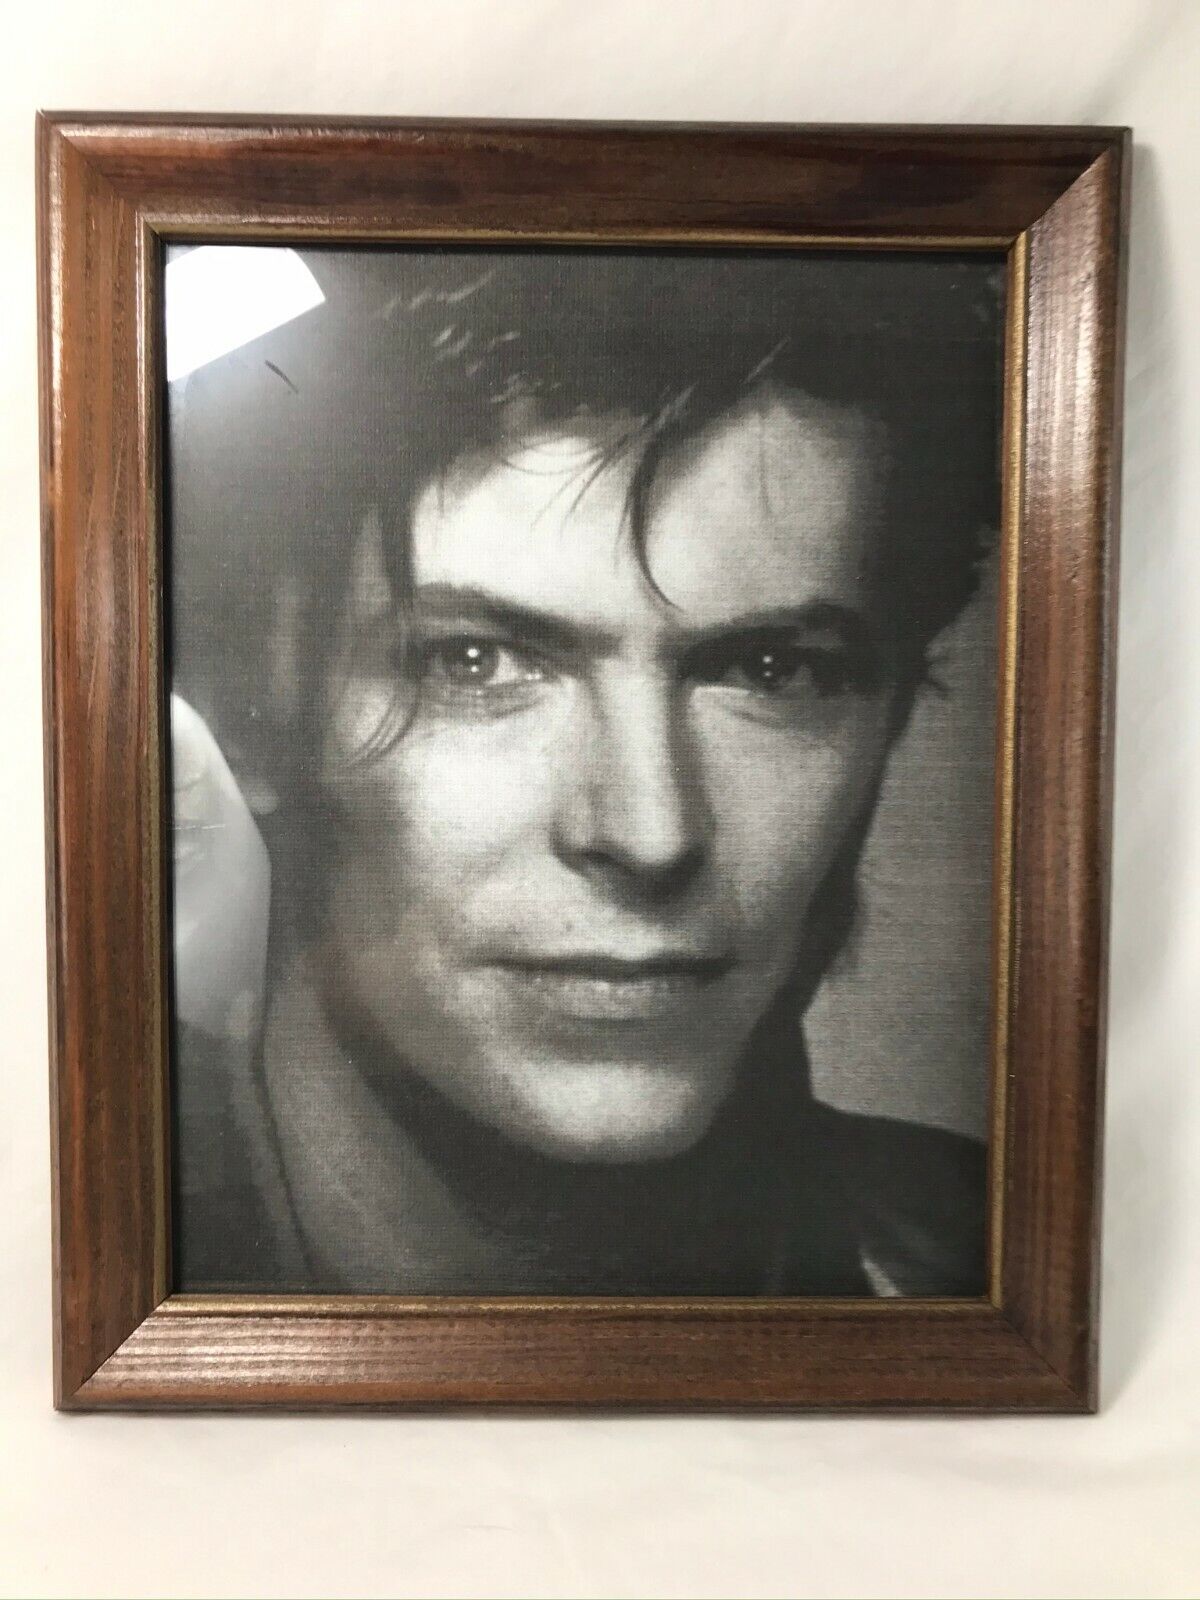 David Bowie Framed 8x10 Photo Display Wood Frame Ziggy Stardust Rock Music Pop